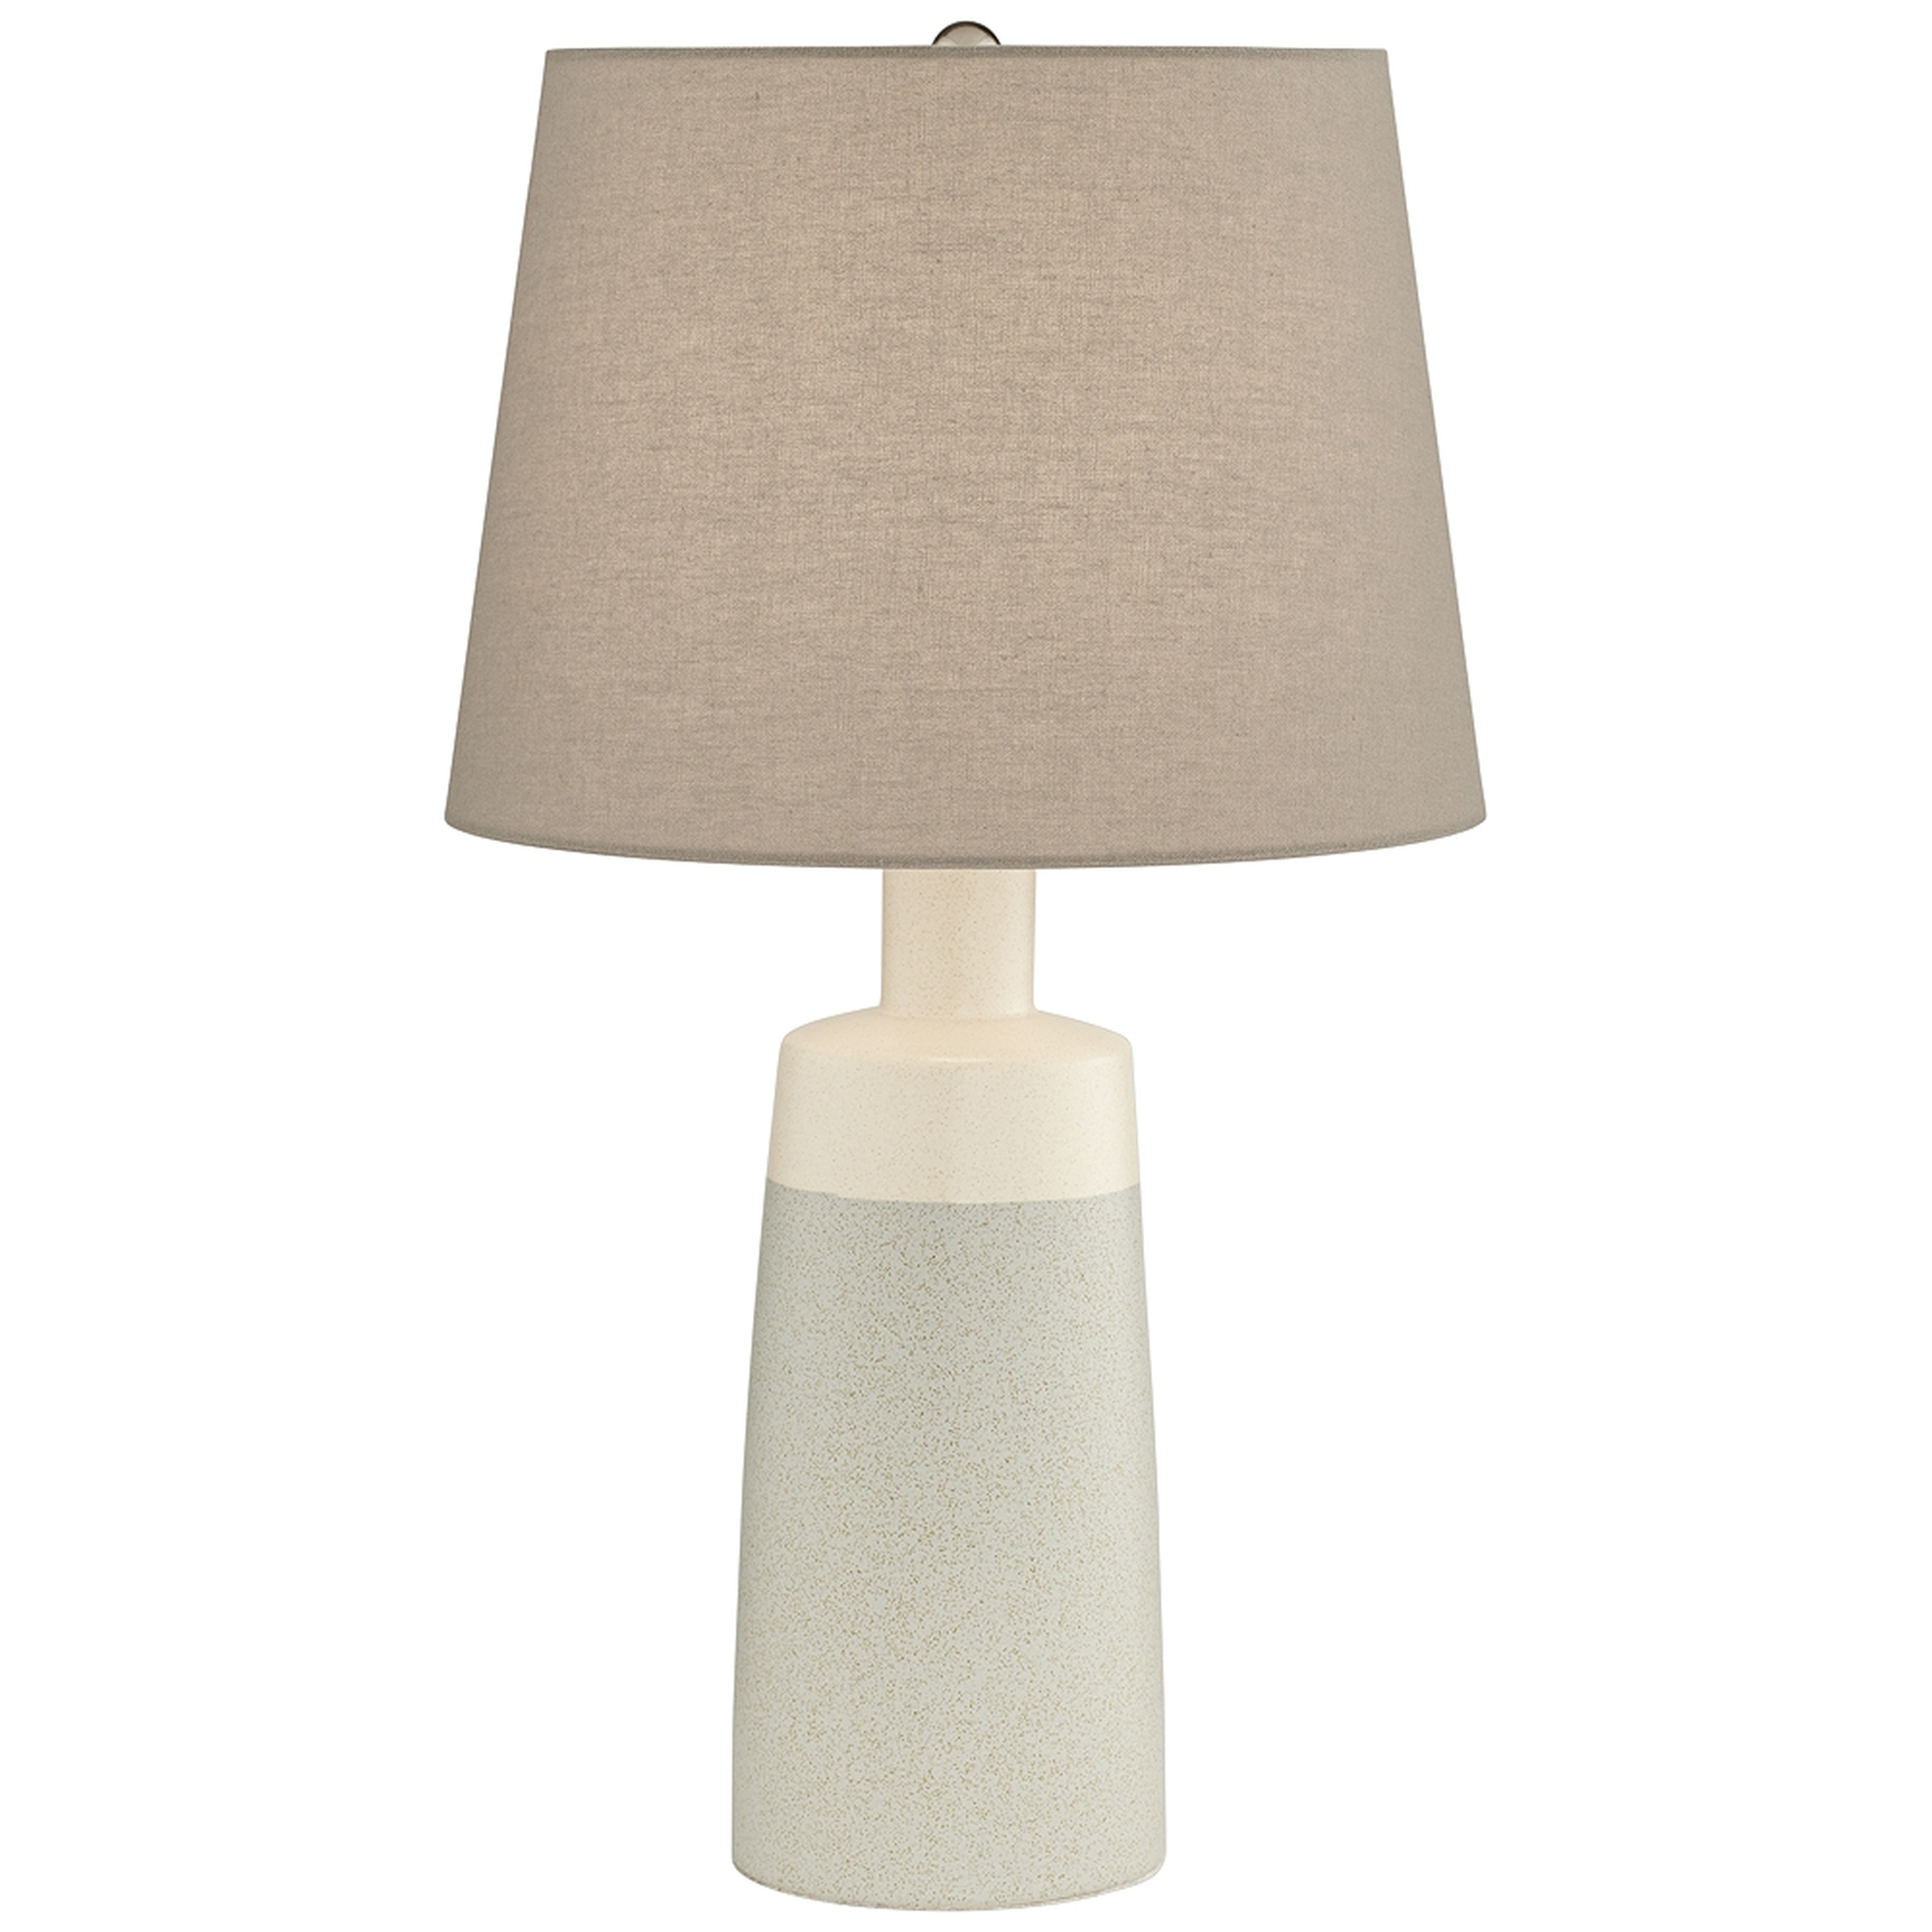 Effie Modern Farmhouse Grey Ceramic Table Lamp - Style # 94R37 - Lamps Plus